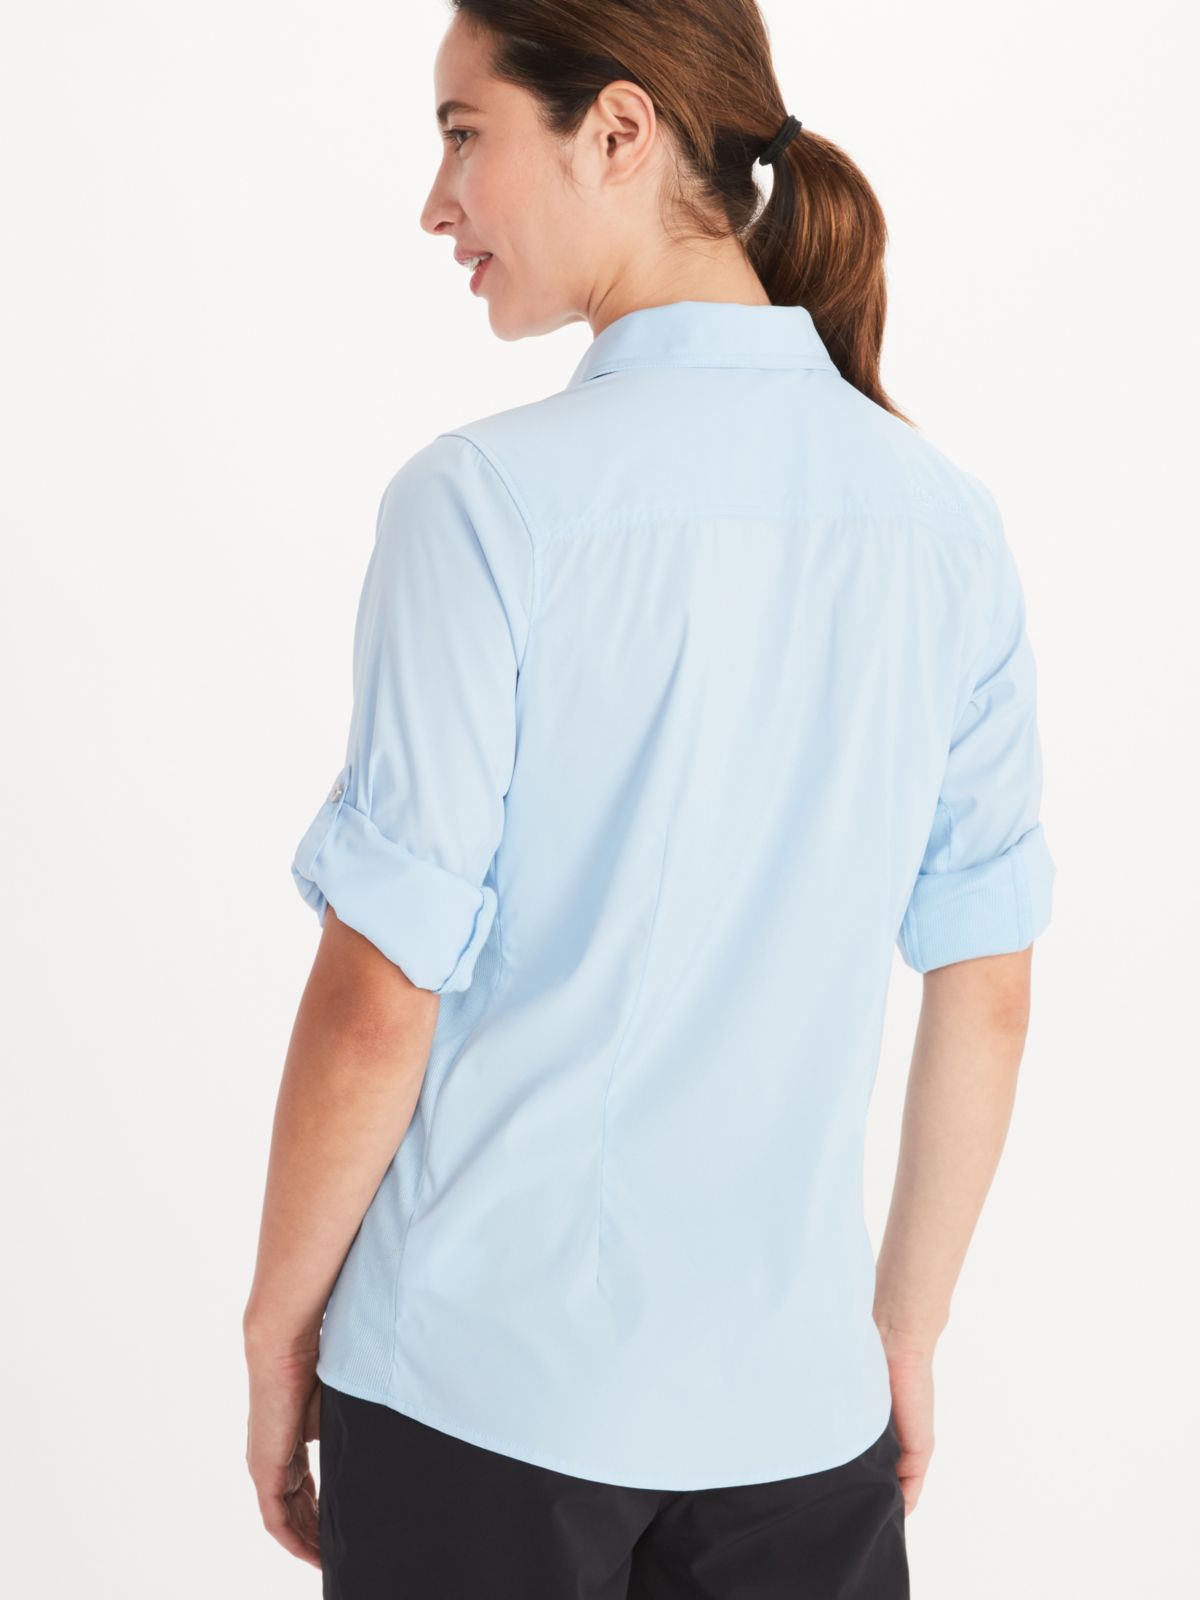 Women's Annika Long Sleeve Shirt